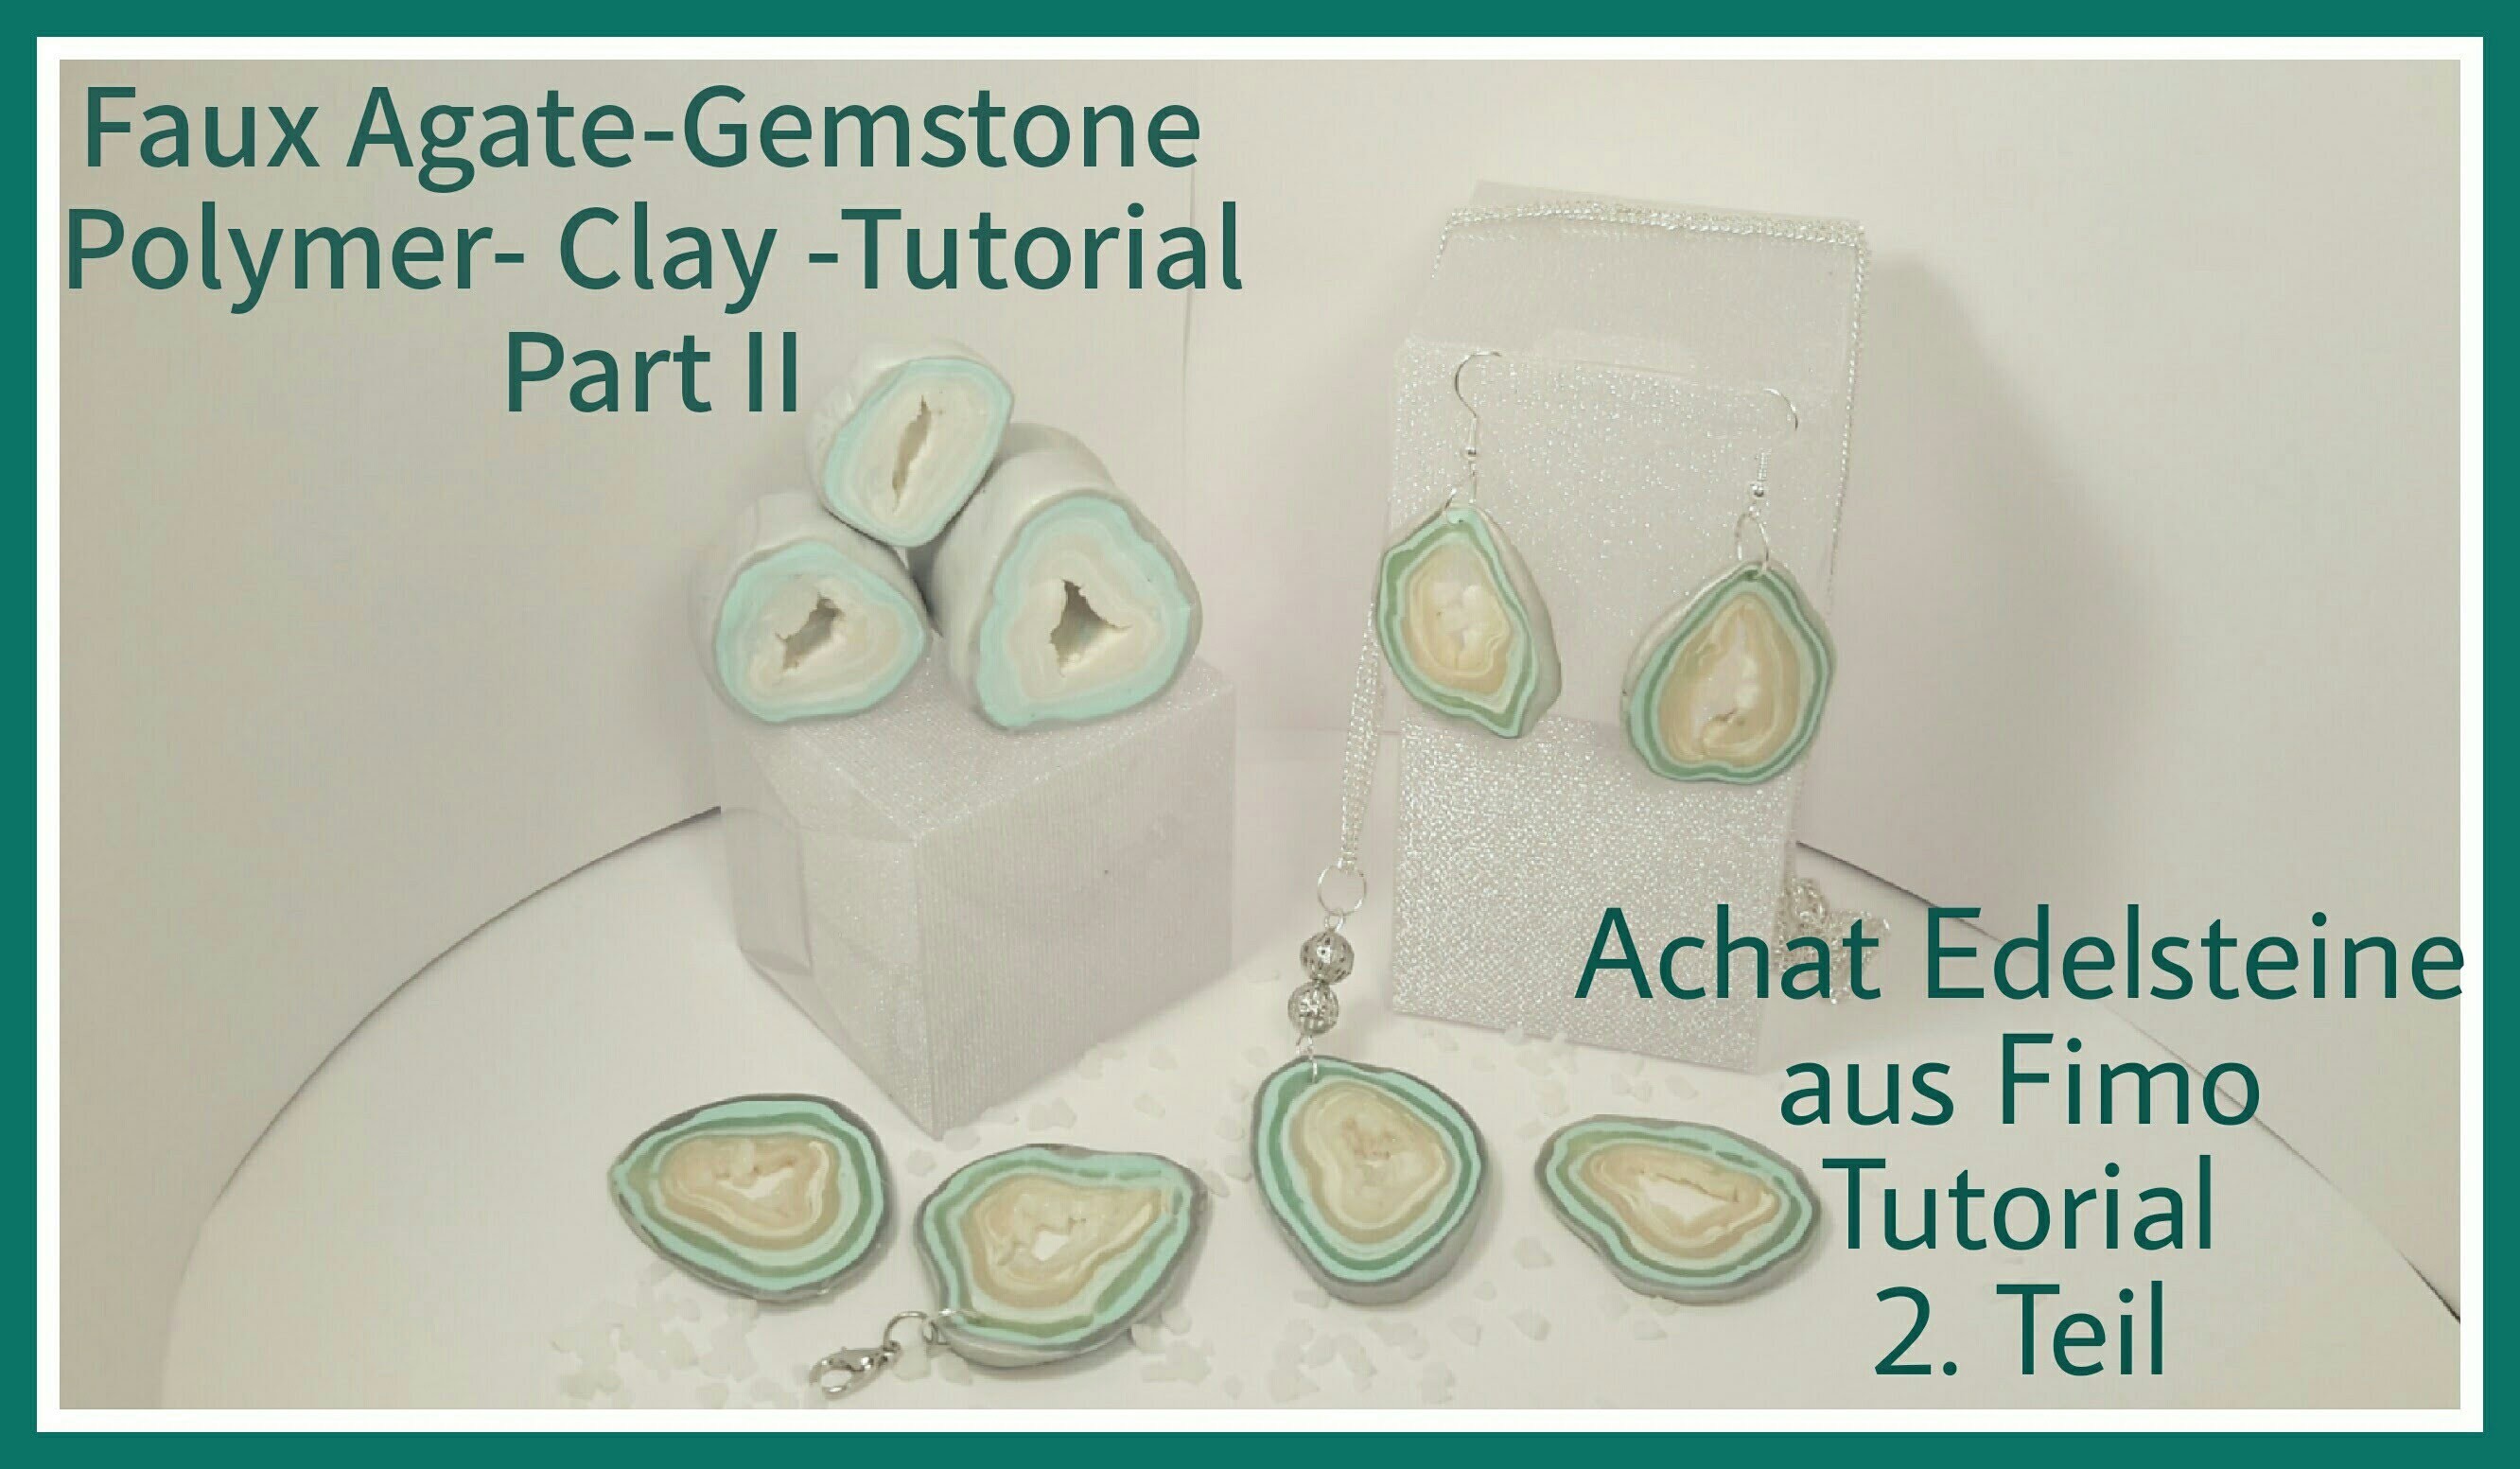 Faux Agate-Gemstone Polymer clay Tutorial Part II, Achat-Edelsteine aus Fimo Teil 2,